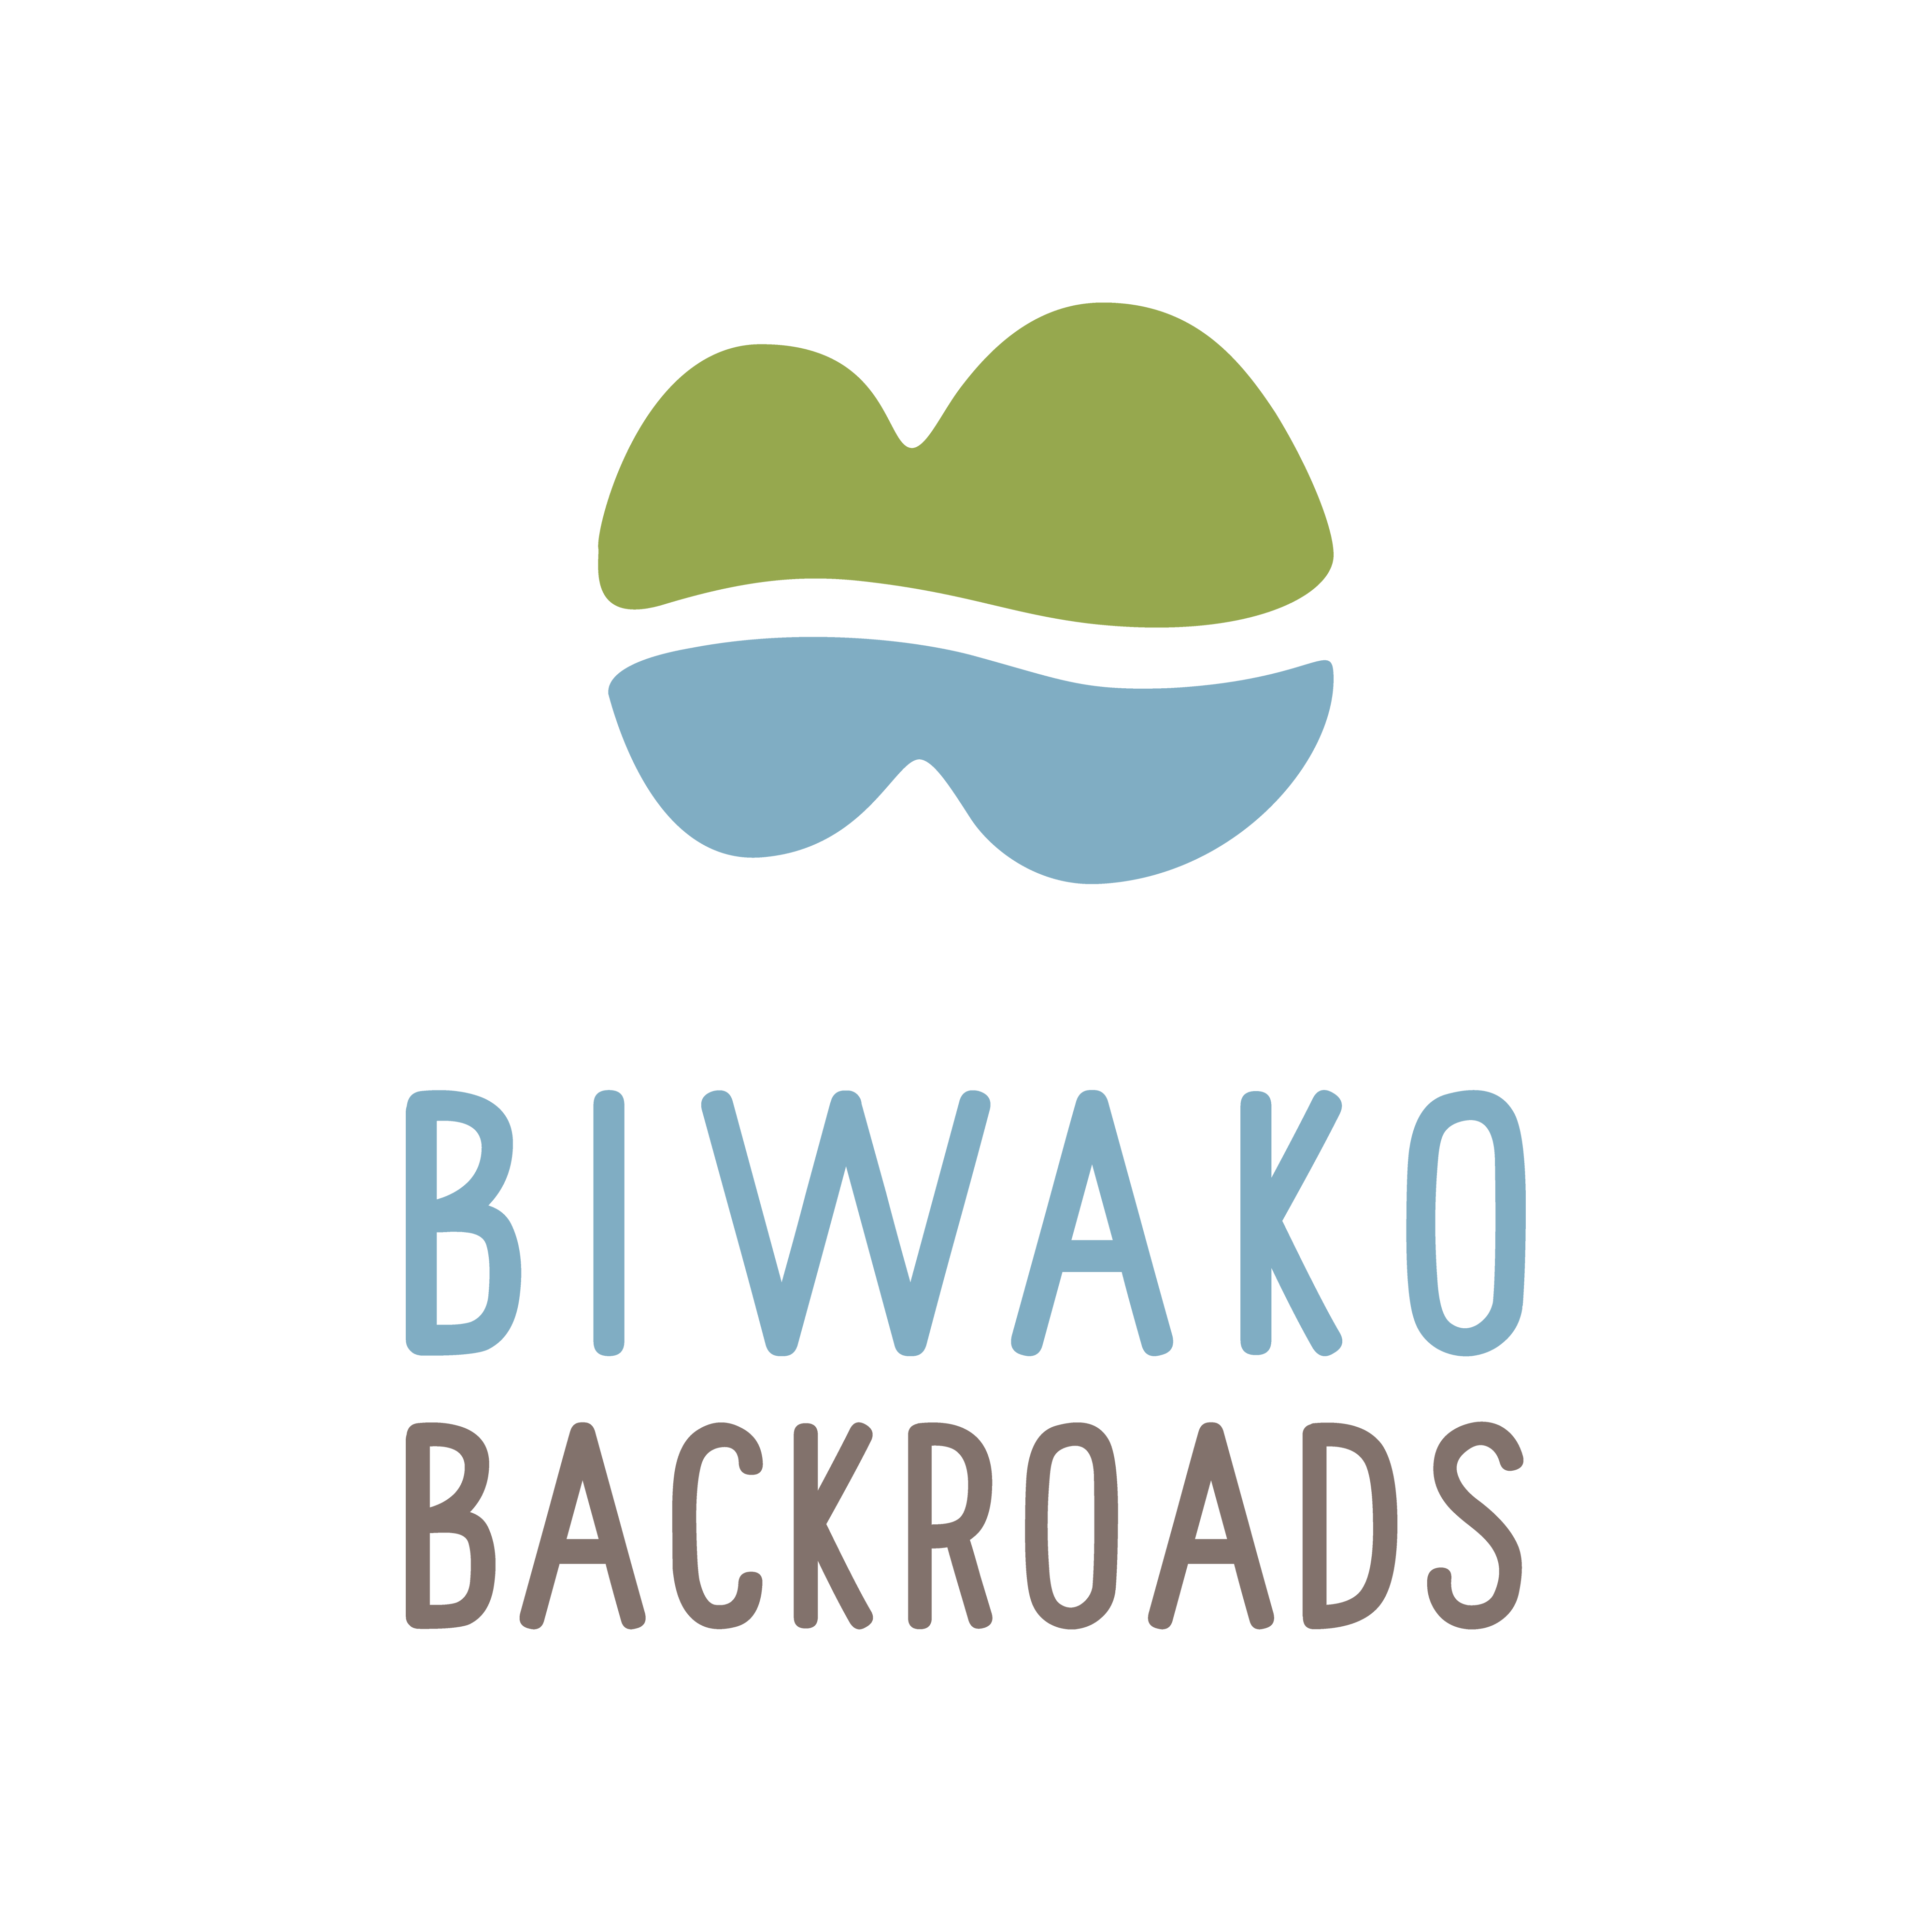 biwakobackroads